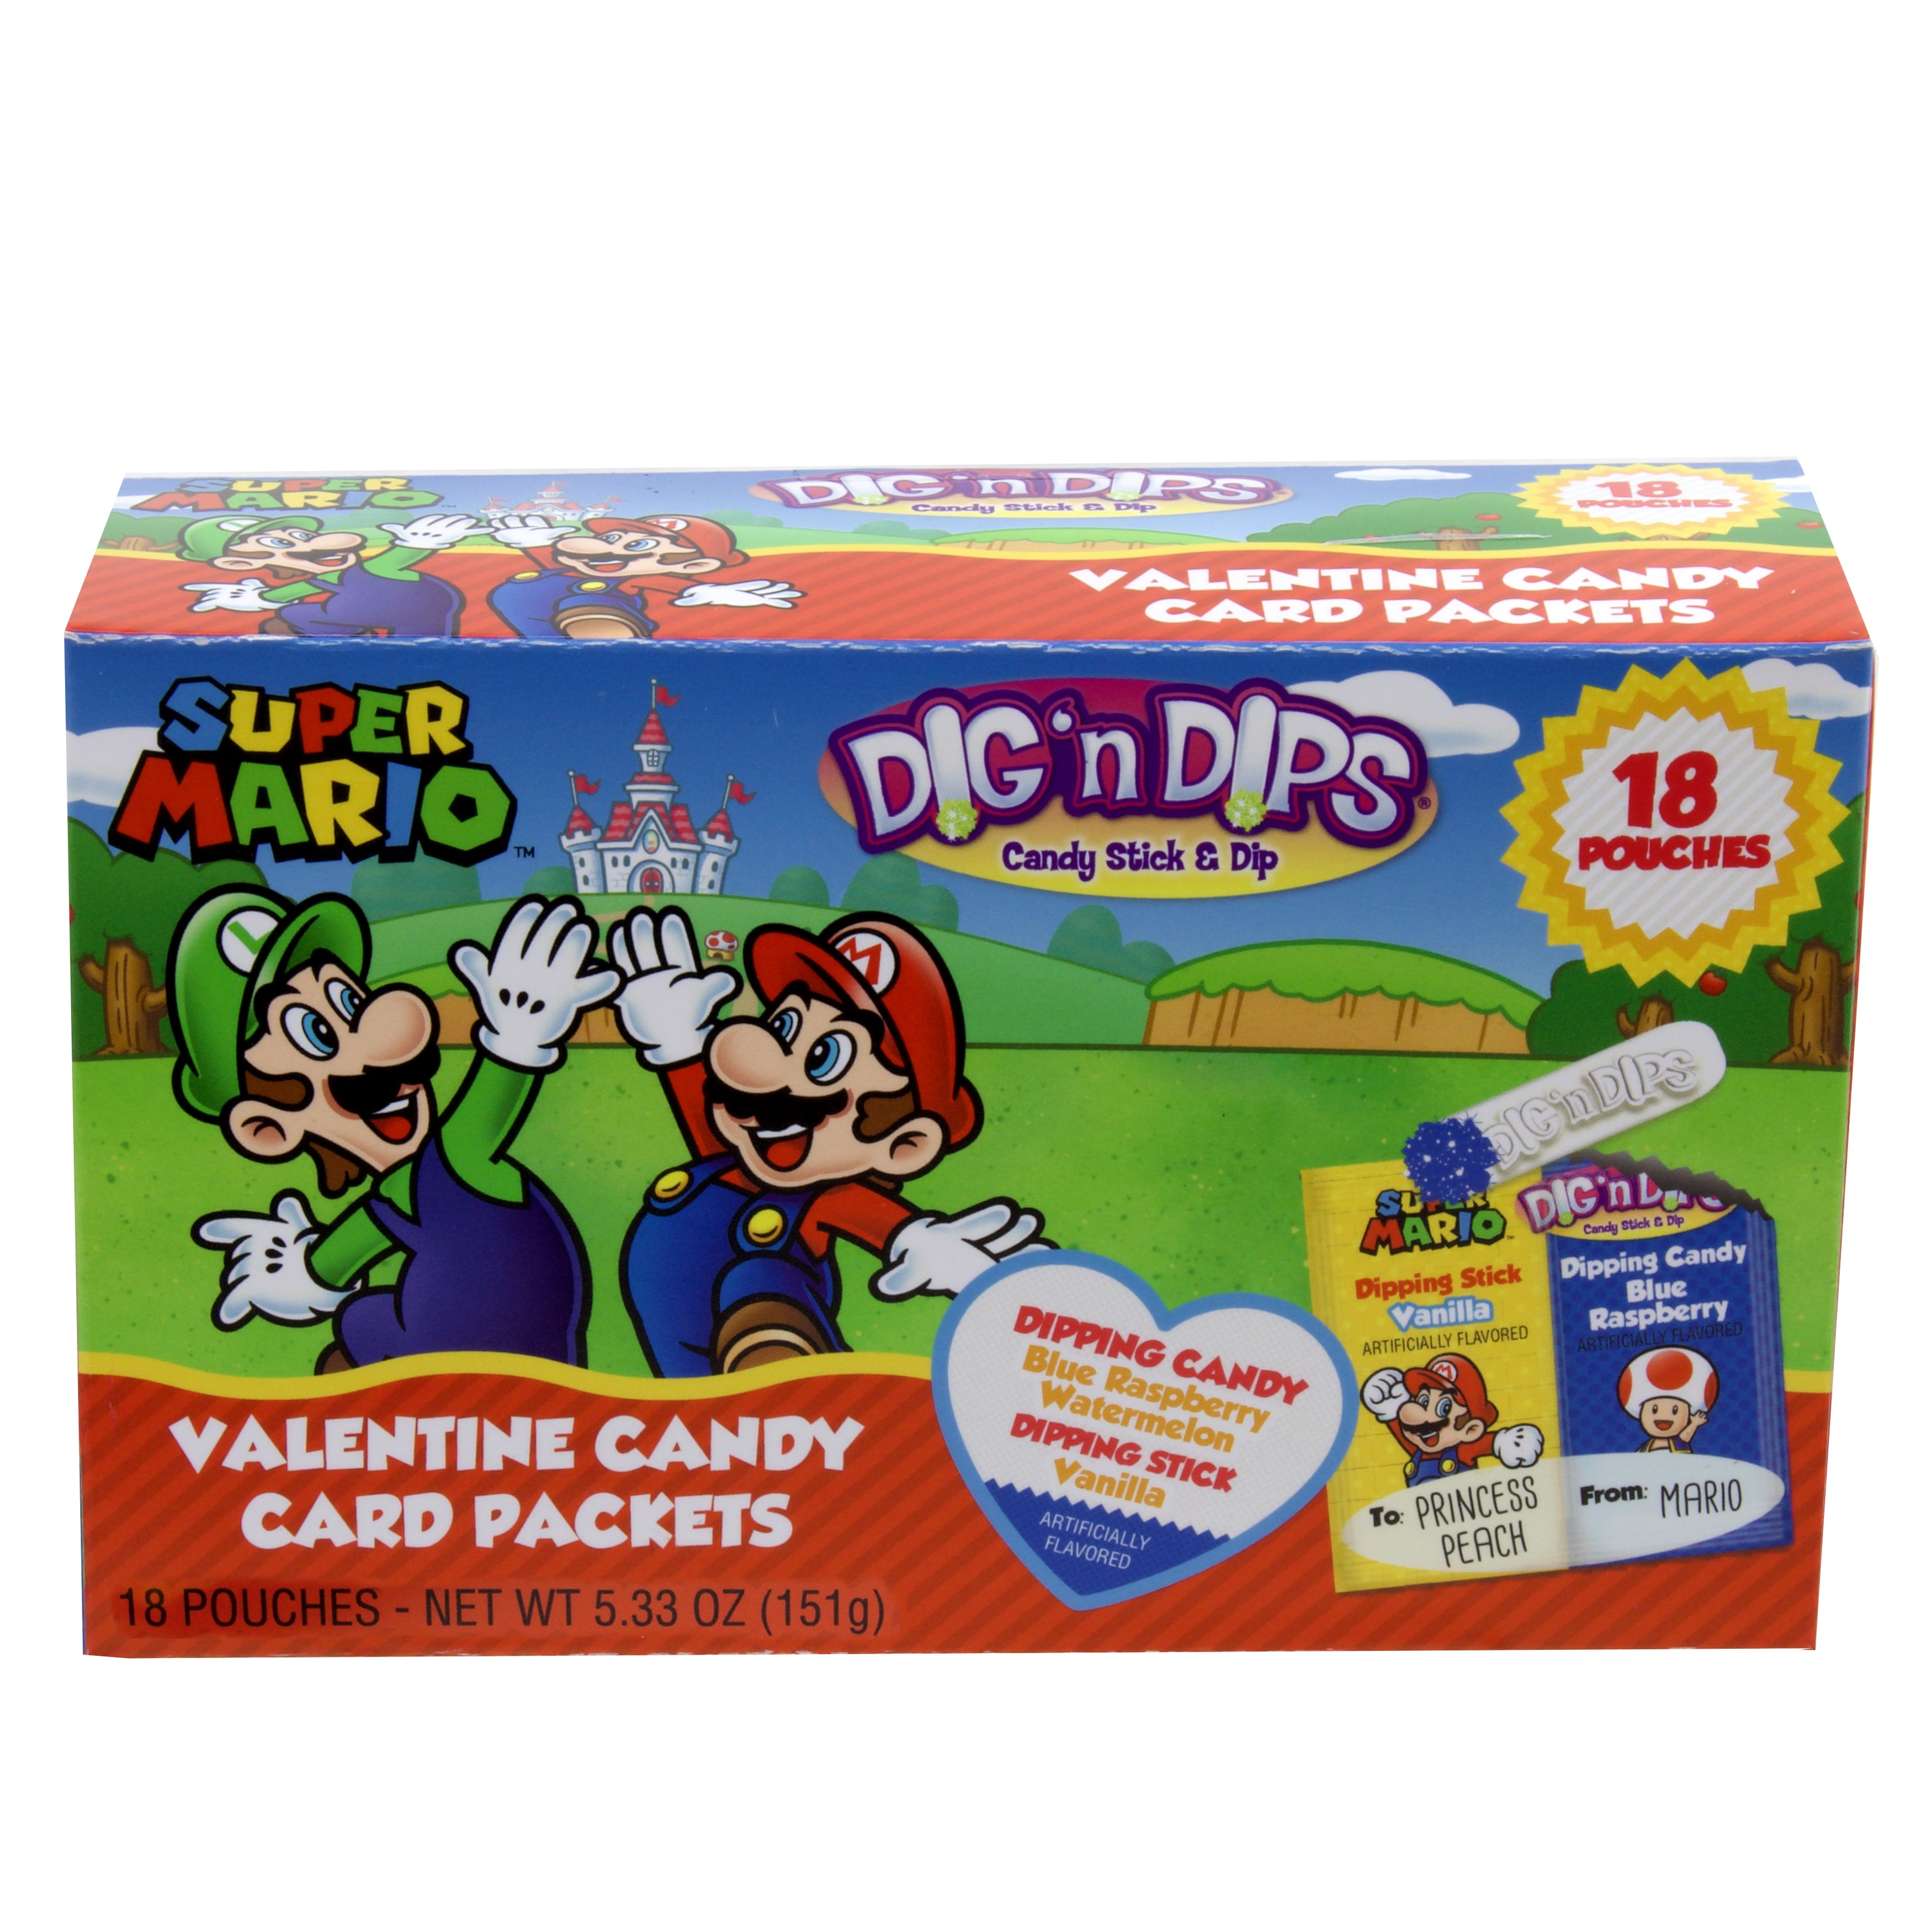 Frankford Super Mario Valentine Fruit Flavored Dig N Dips Friendship Exchange Candy, 18 Count - Walmart.com